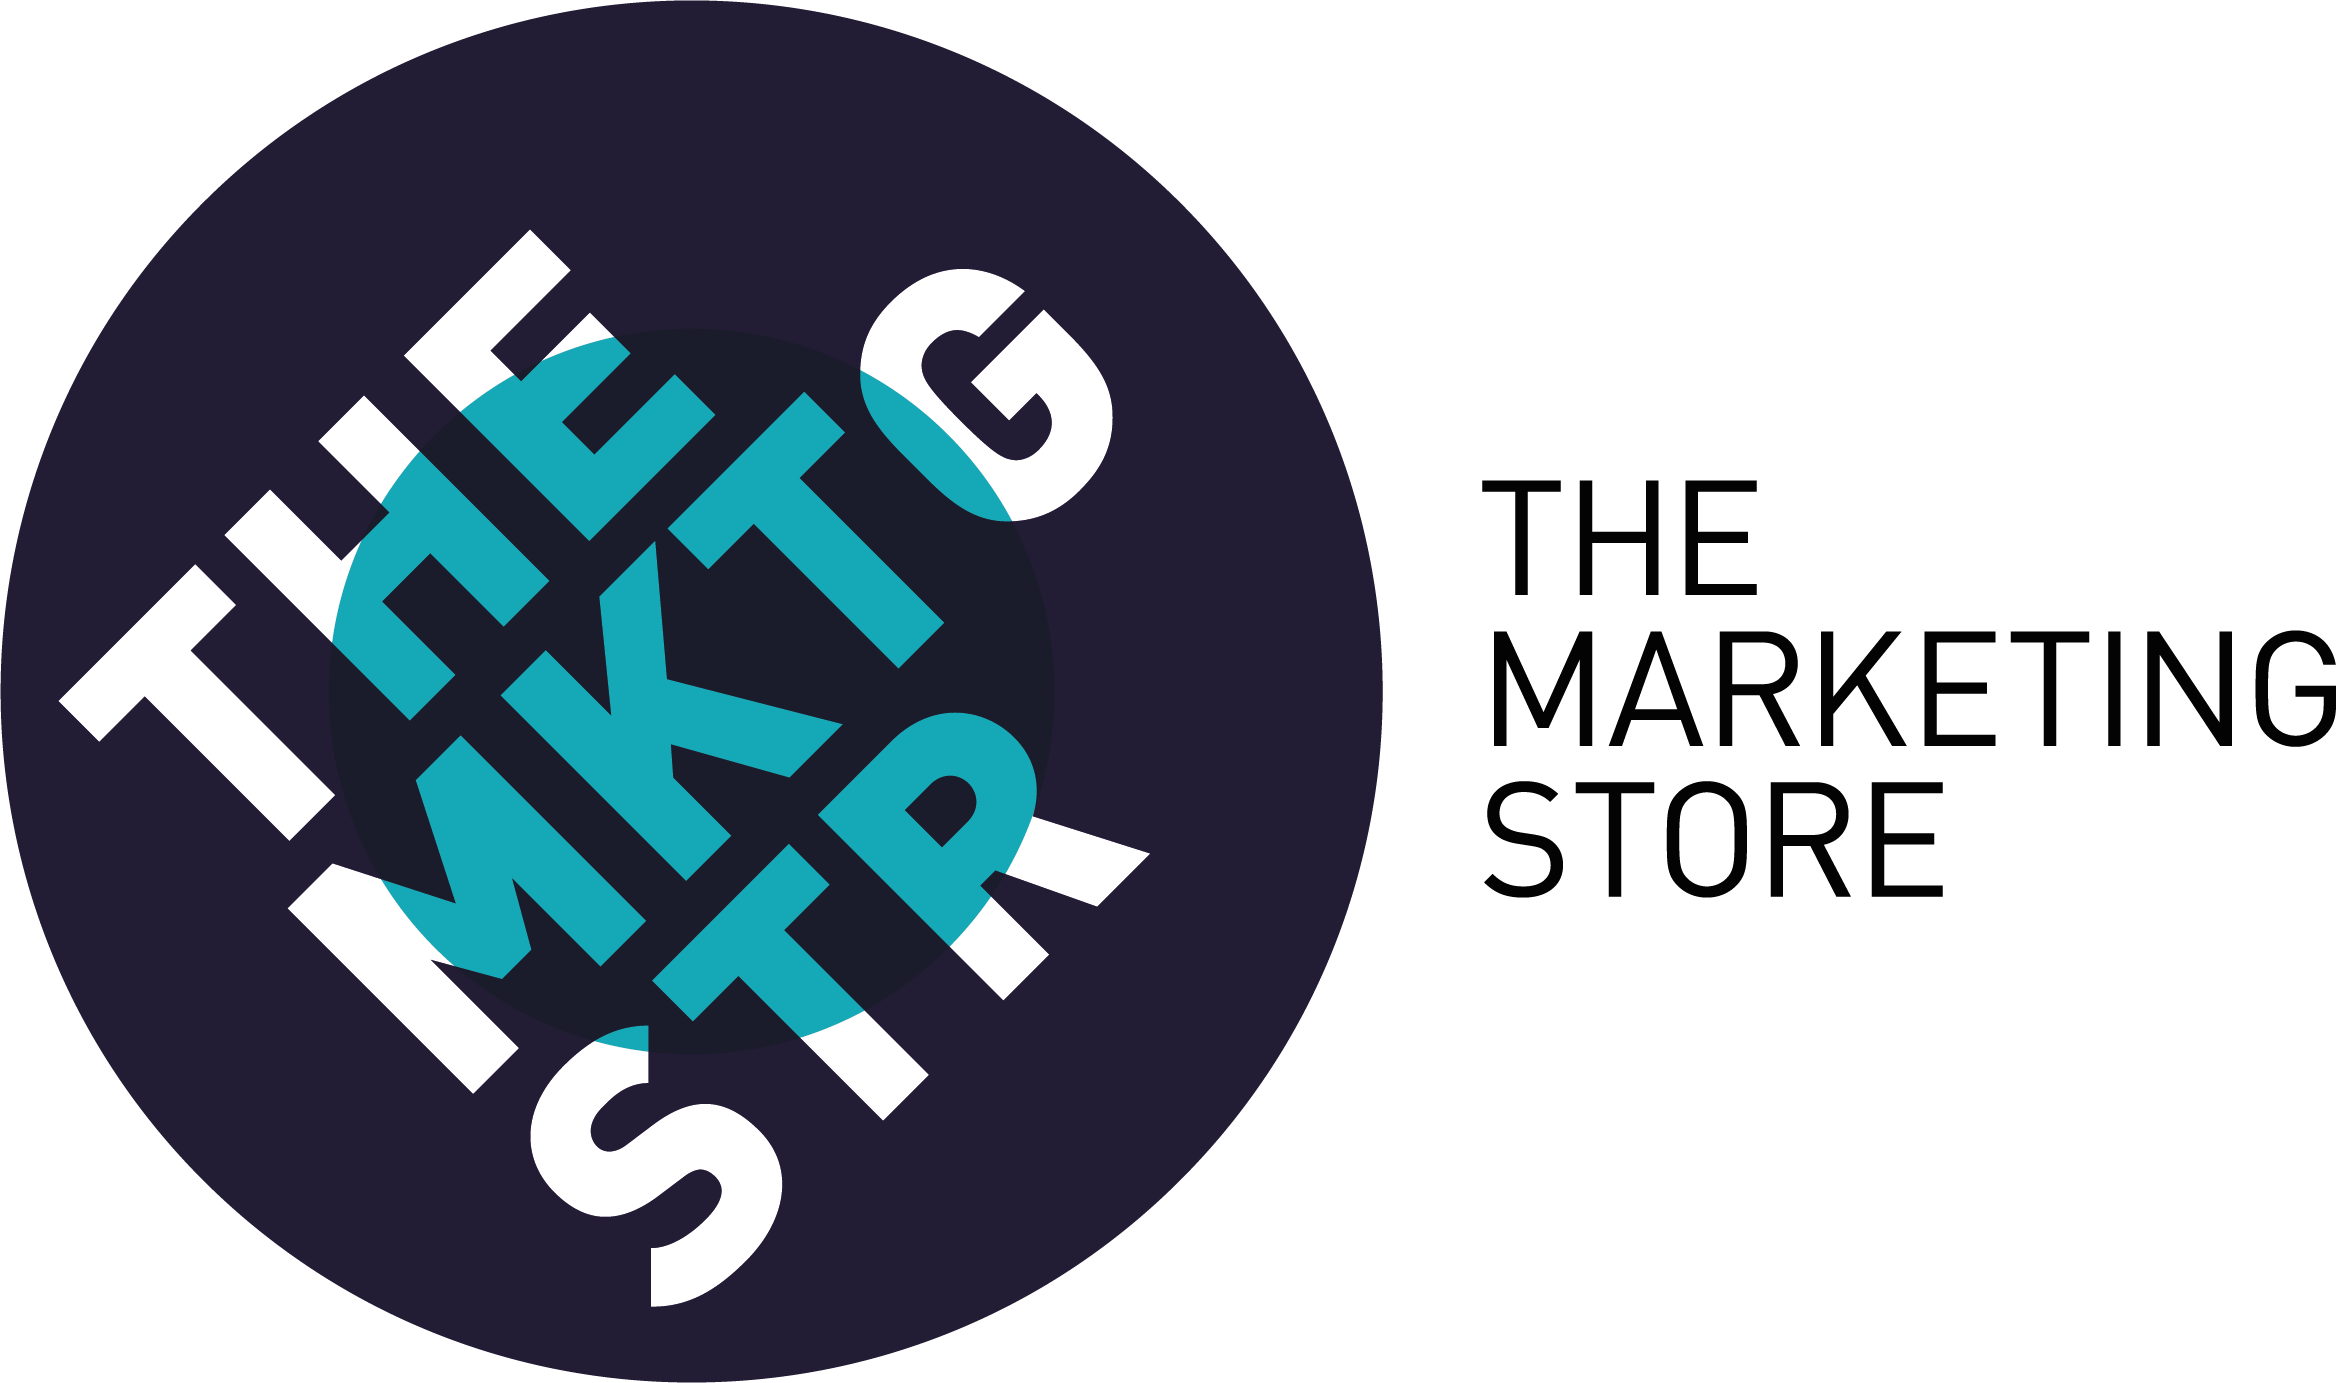 The Marketing Store Worldwide logo